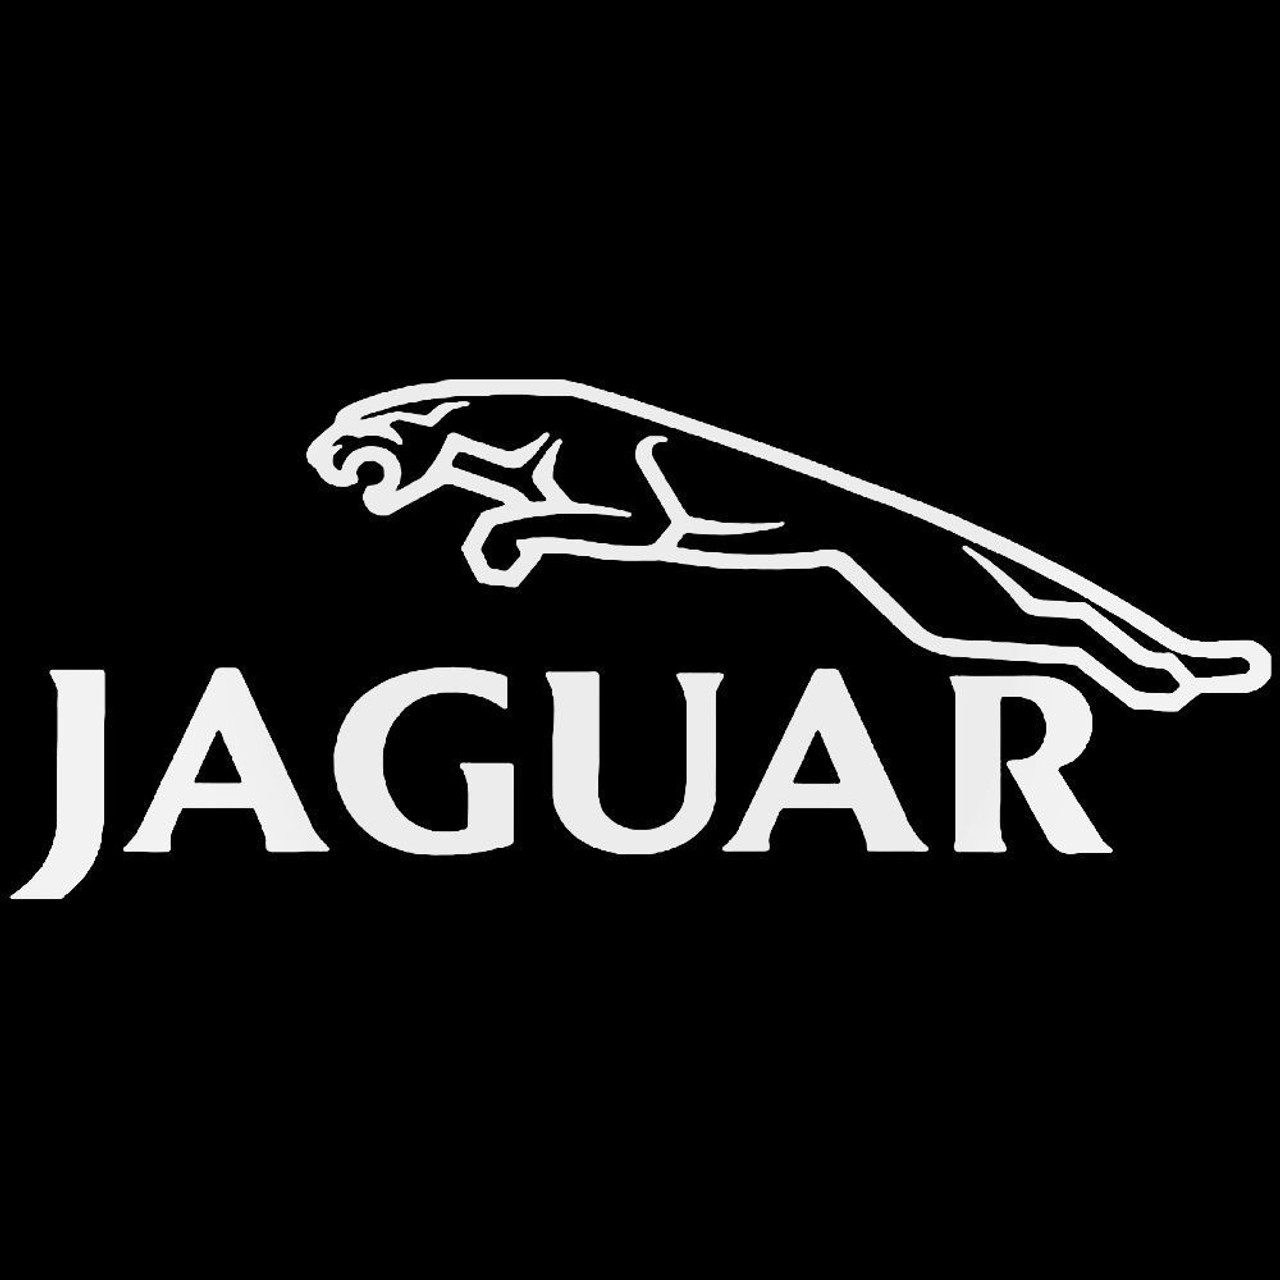 Jaguar Vinyl Decal Sticker